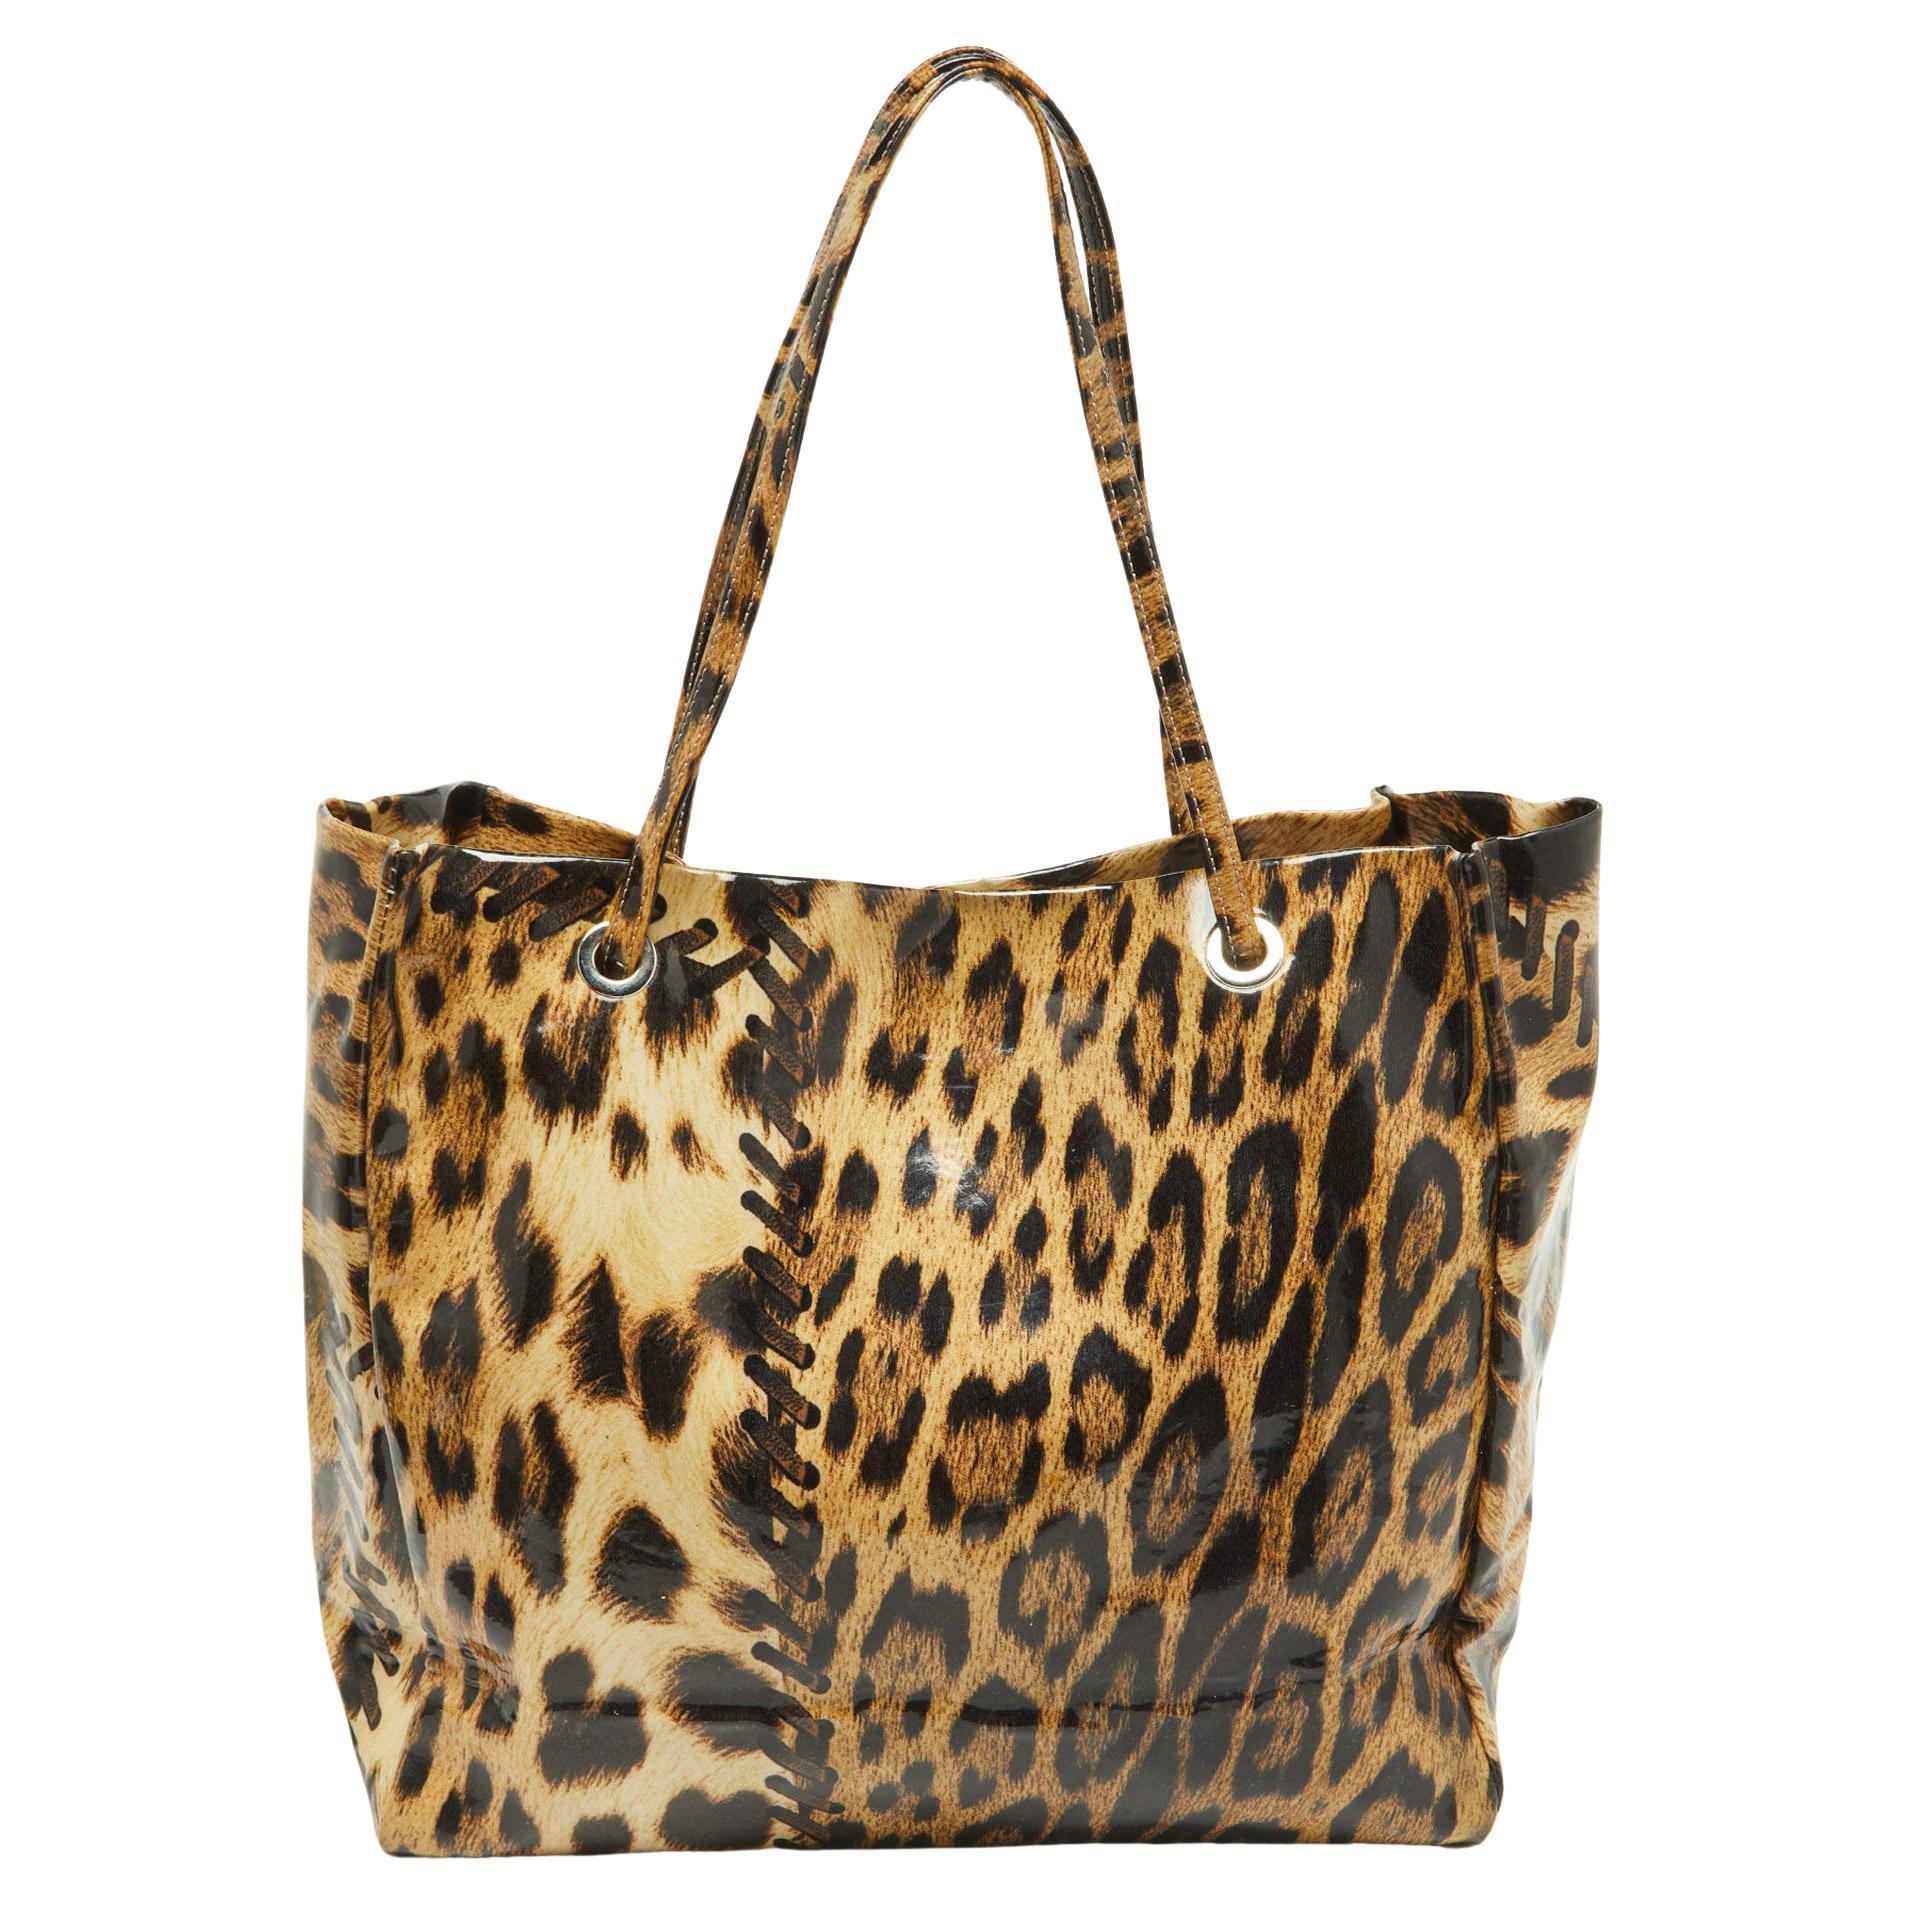 Where can I buy Roberto Cavalli handbags?